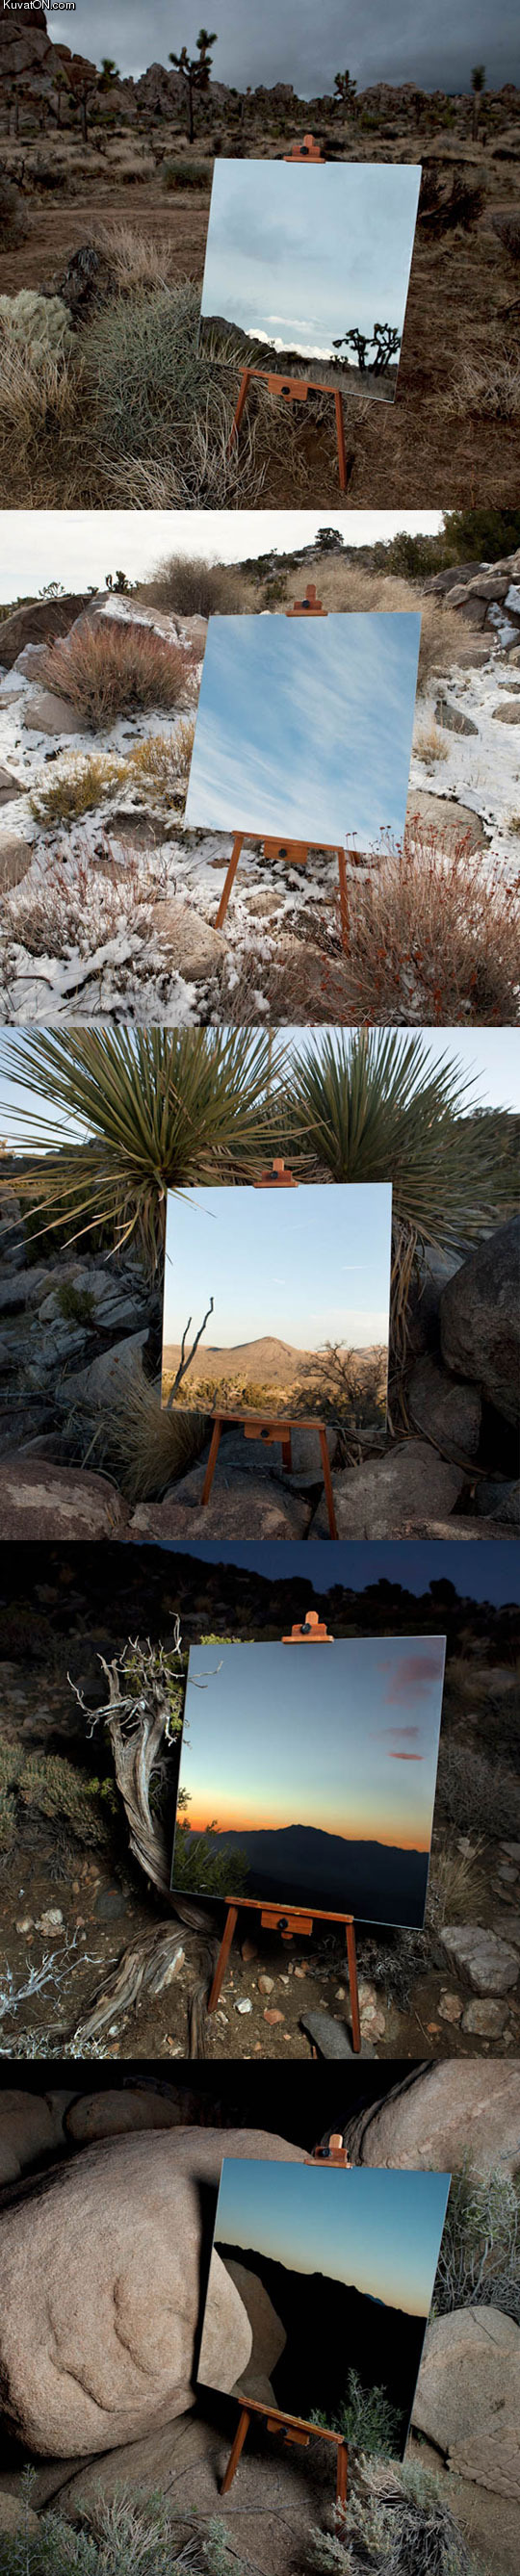 photos_of_mirrors_in_the_desert.jpg